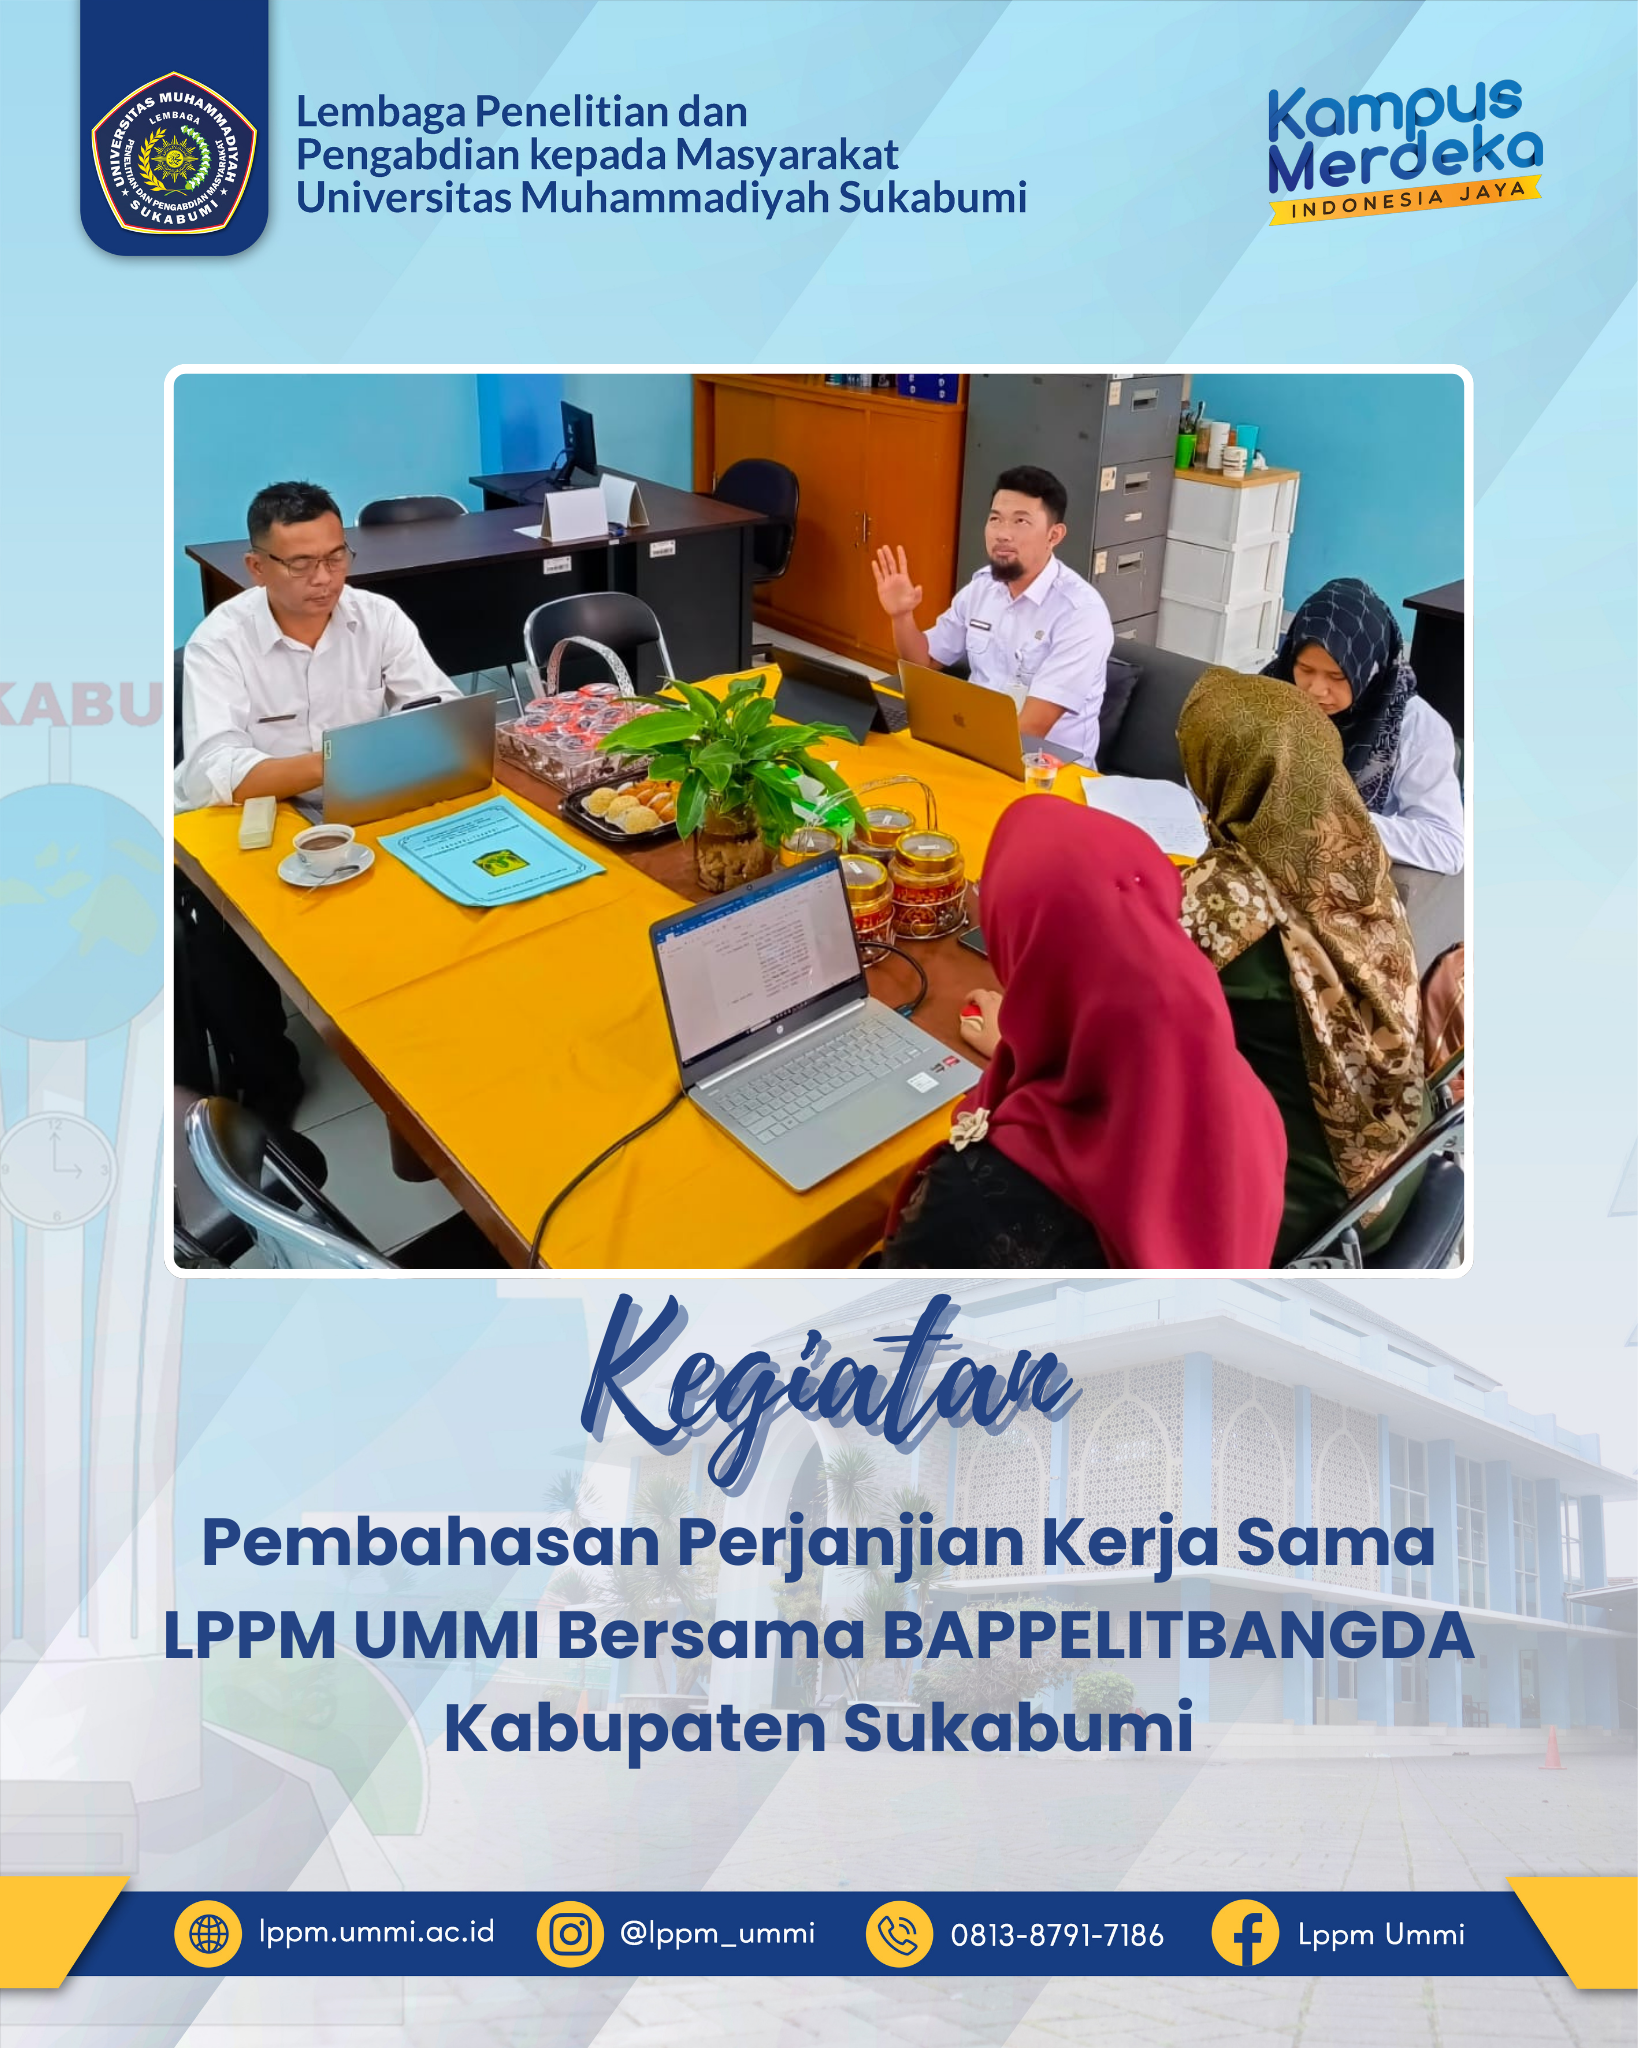 Pembahasan Perjanjian Kerja Sama antara LPPM UMMI dengan BAPPELITBANGDA Kabupaten Sukabumi.